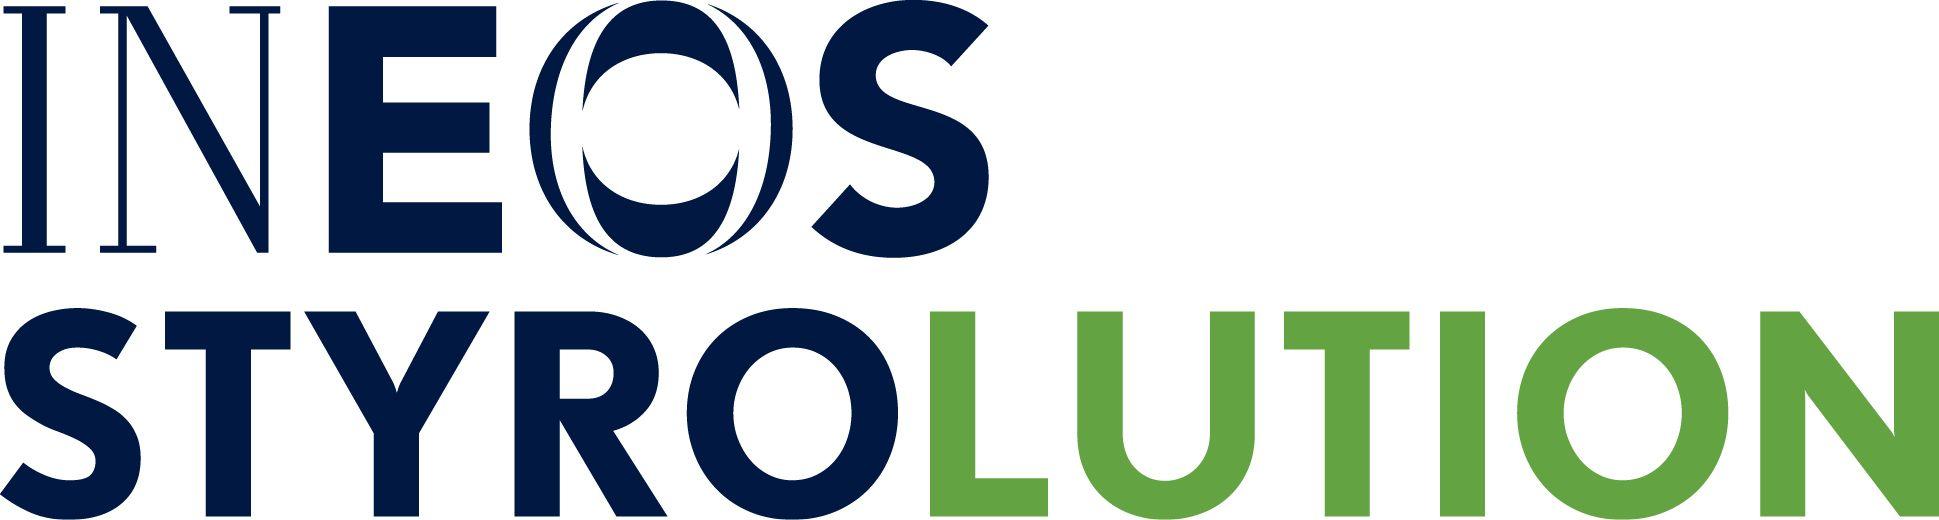 Ineos Logo - File:INEOS Styrolution logo.jpg - Wikimedia Commons